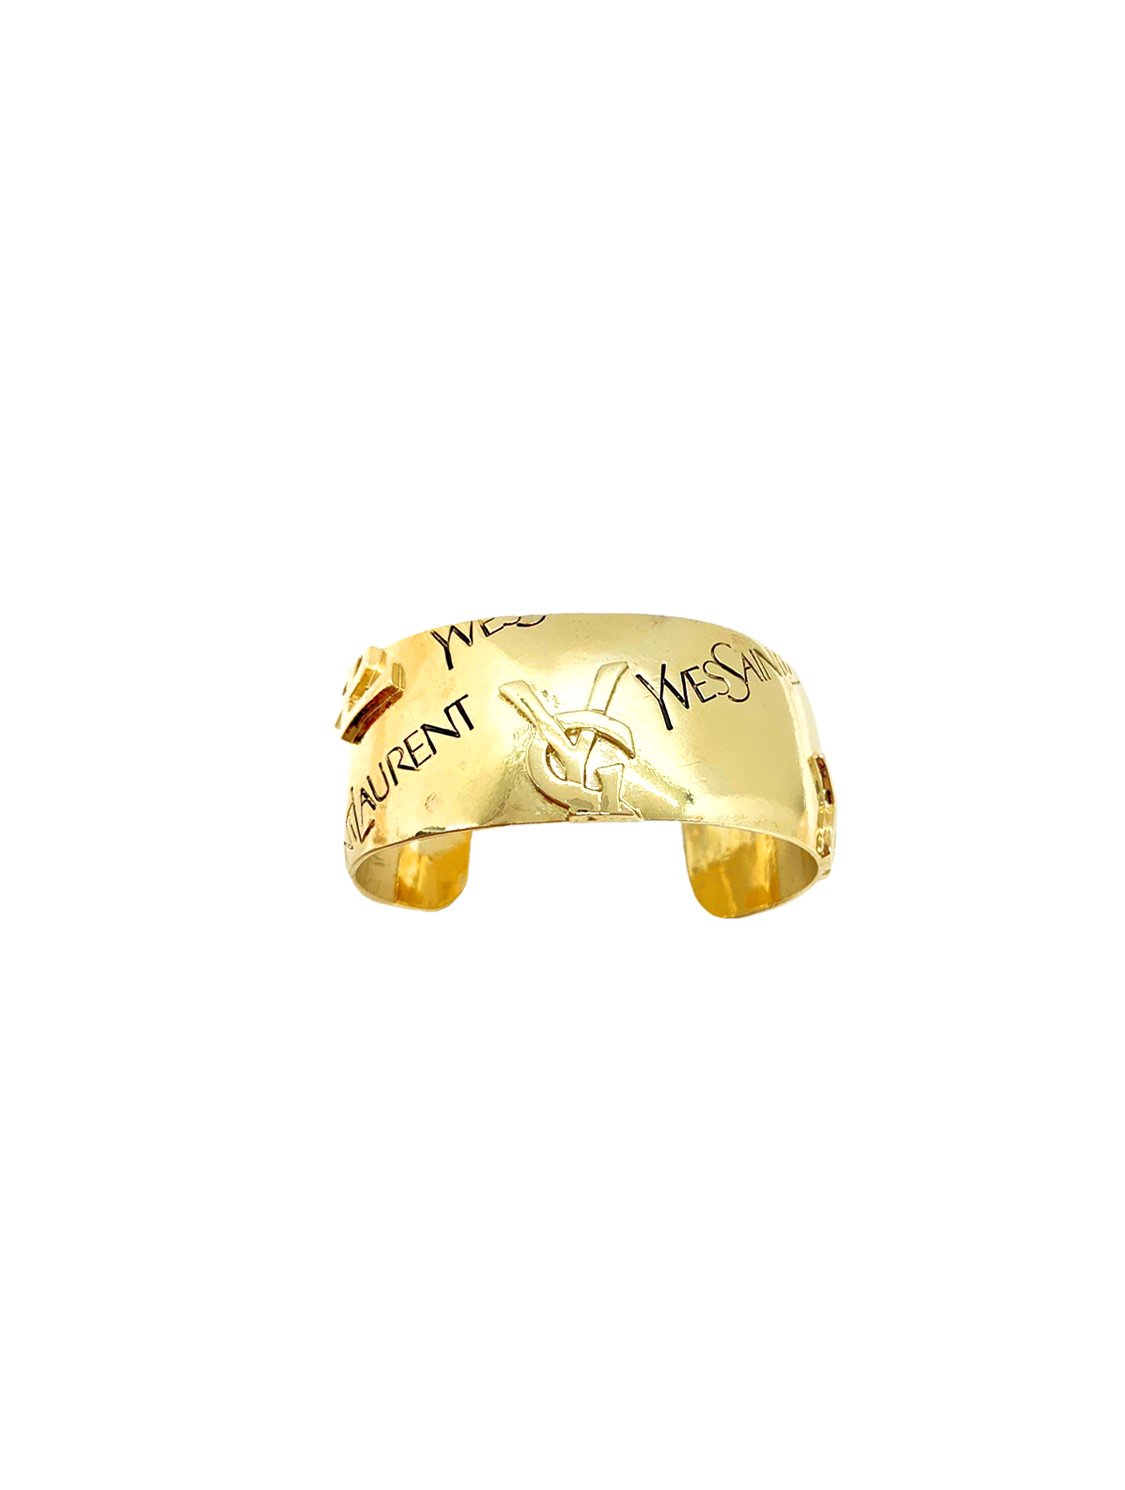 Yves Saint Laurent 1990s Rare Gold Logo Cuff